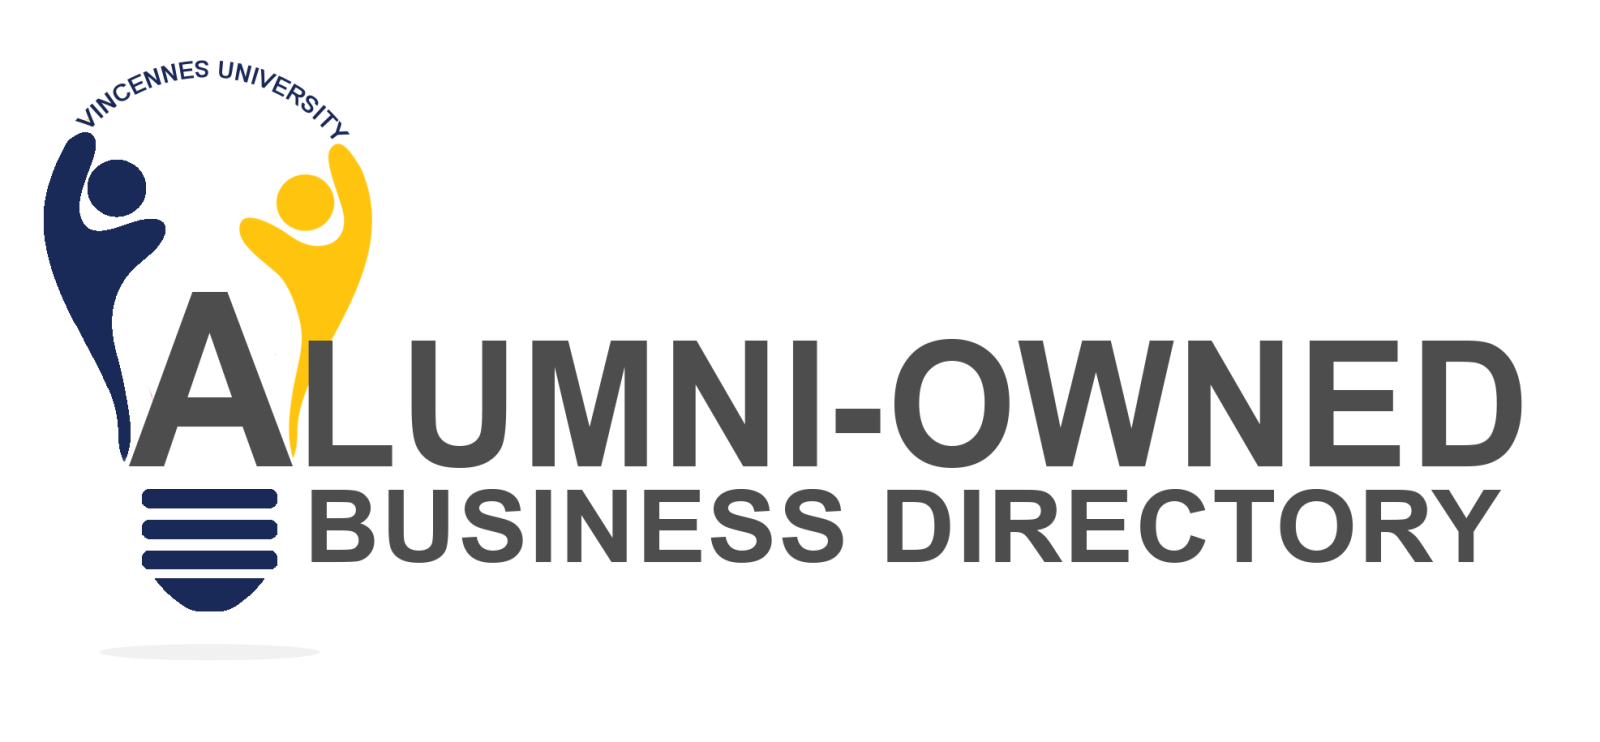 VU Alumni Owned Business Directory